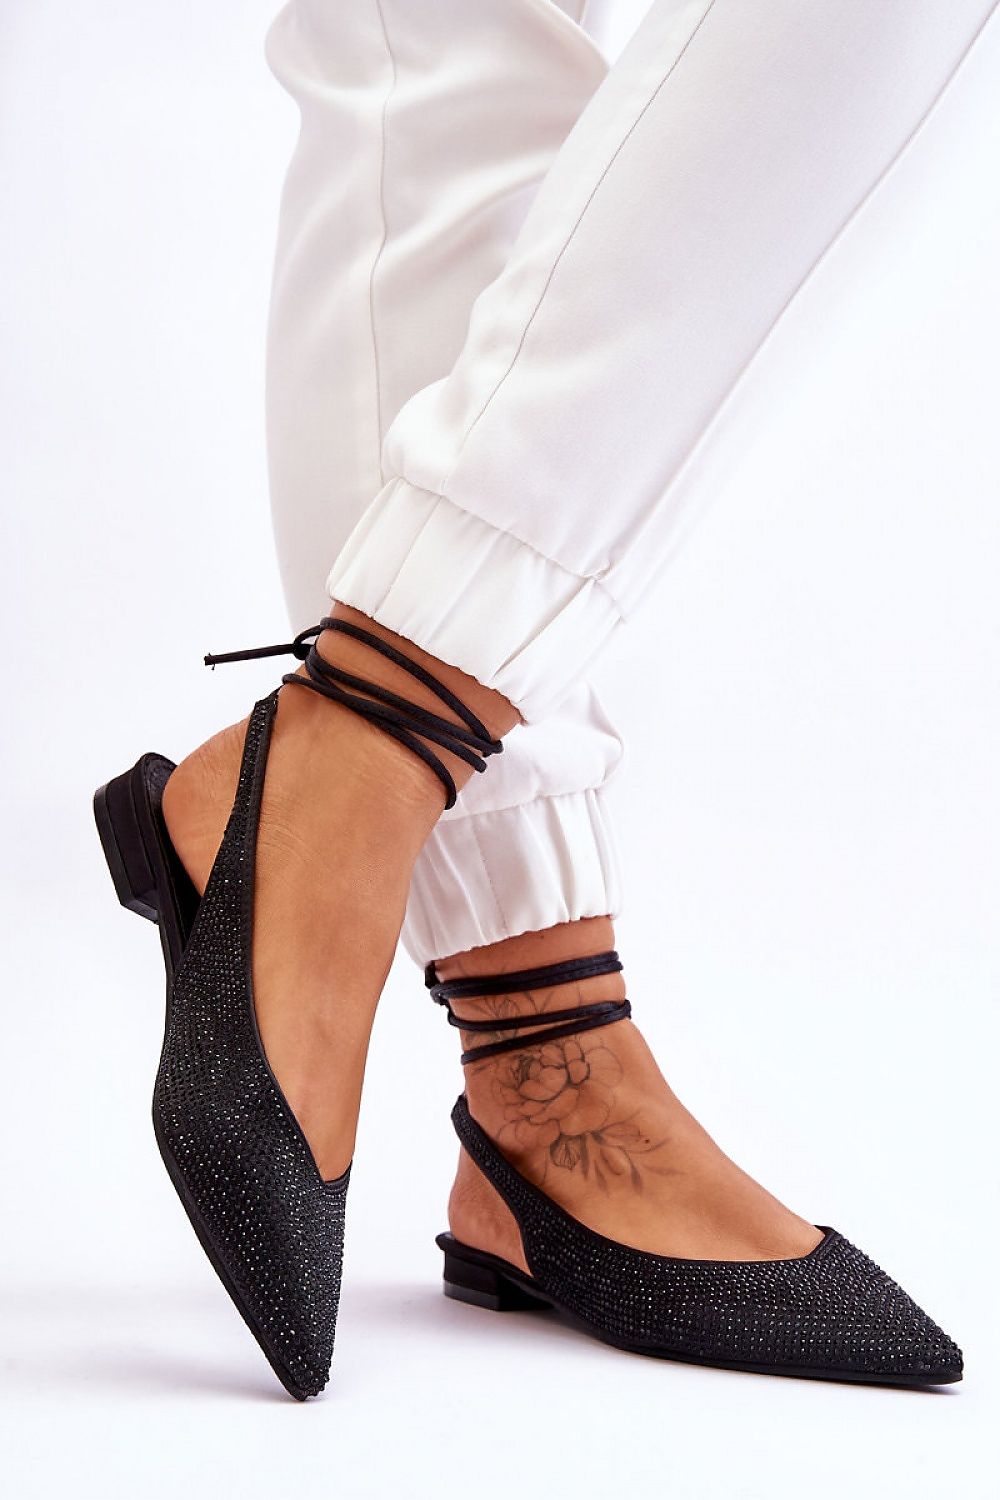 TEEK - Shimmery Textured Ballet Ankle Tie Flats SHOES TEEK Trend black 5.5 